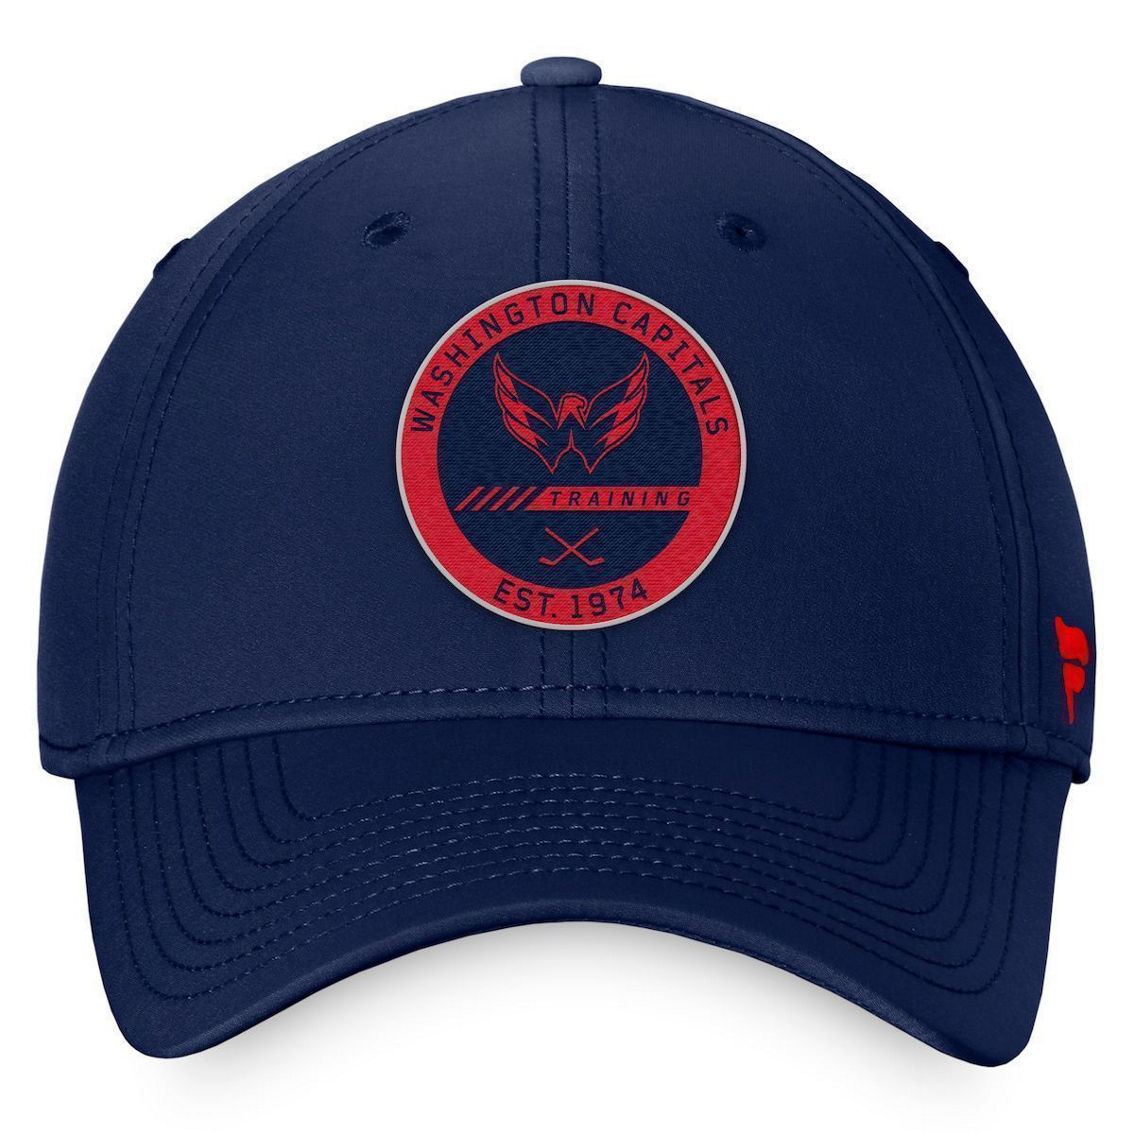 Fanatics Branded Men's Navy Washington Capitals Authentic Pro Team Training Camp Practice Flex Hat - Image 3 of 4